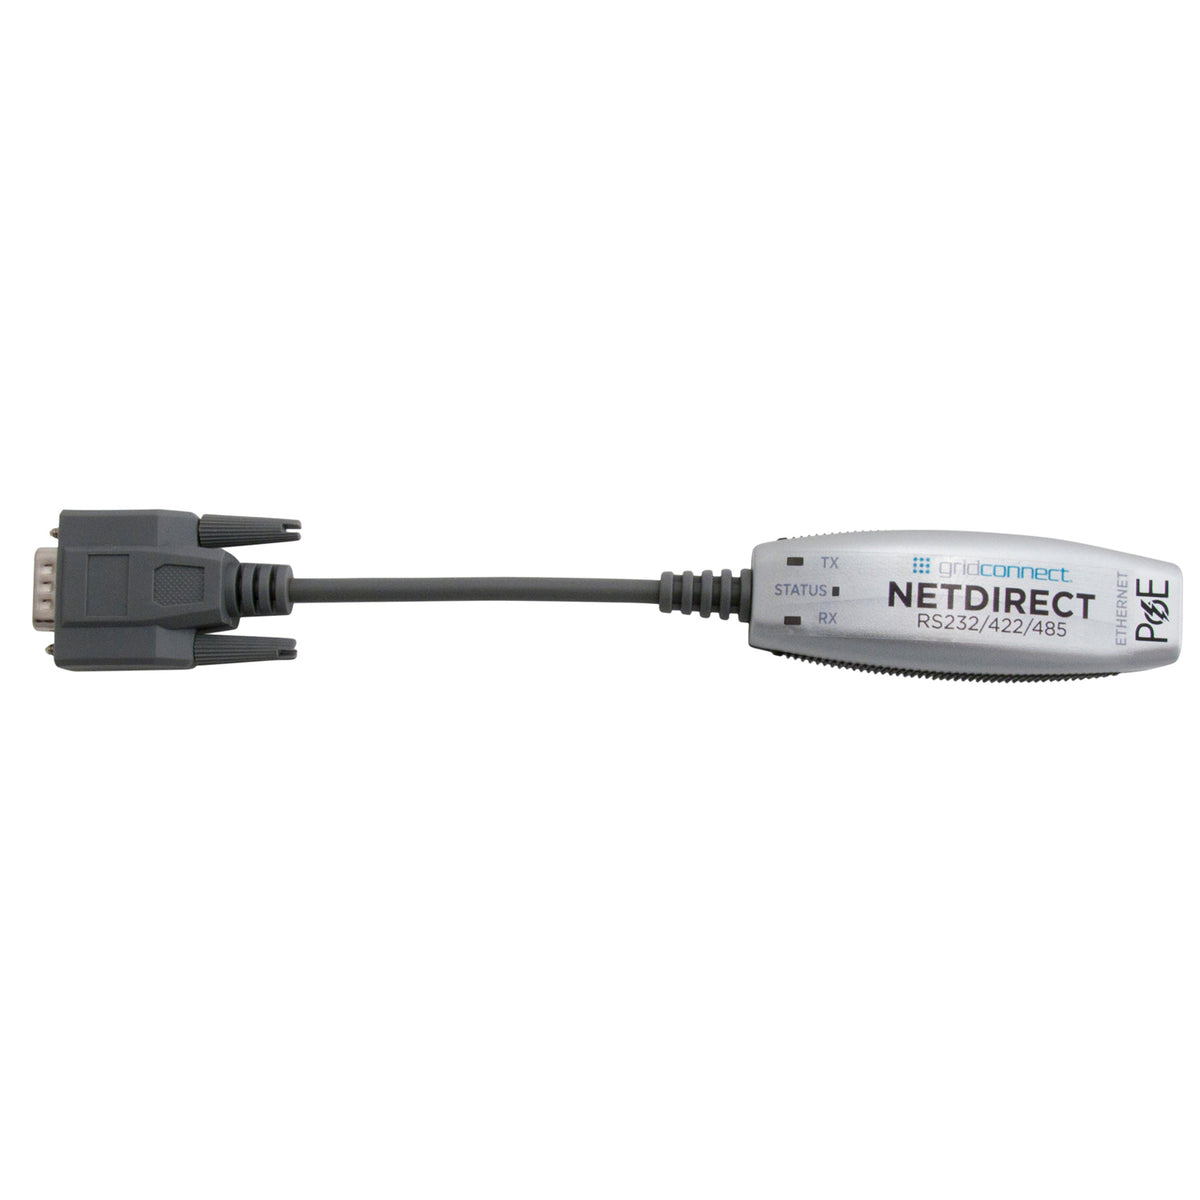 Passive PoE Injector Cable Set : ID 435 : $5.95 : Adafruit